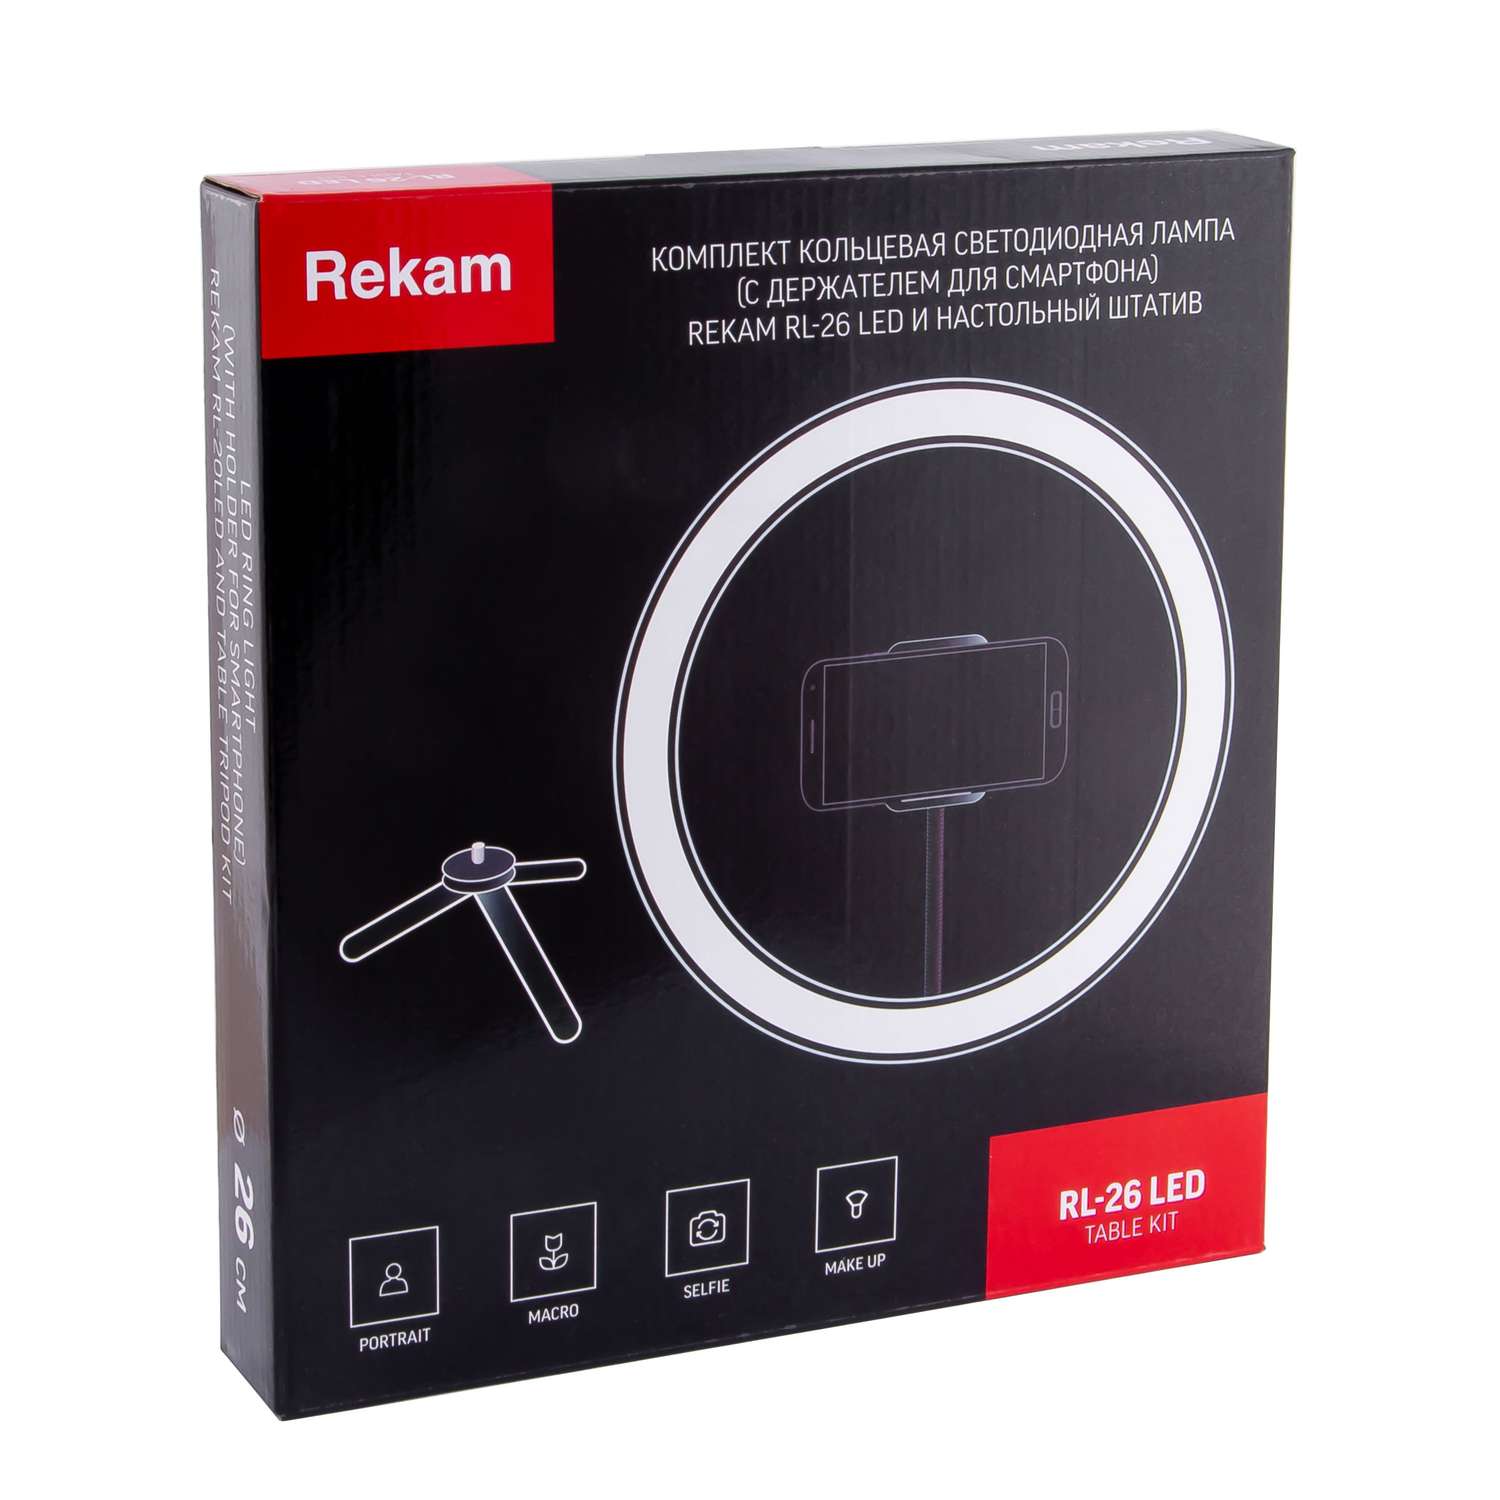 Кольцевая светодиодная лампа Rekam RL-26 LED TABLE Kit - фото 10